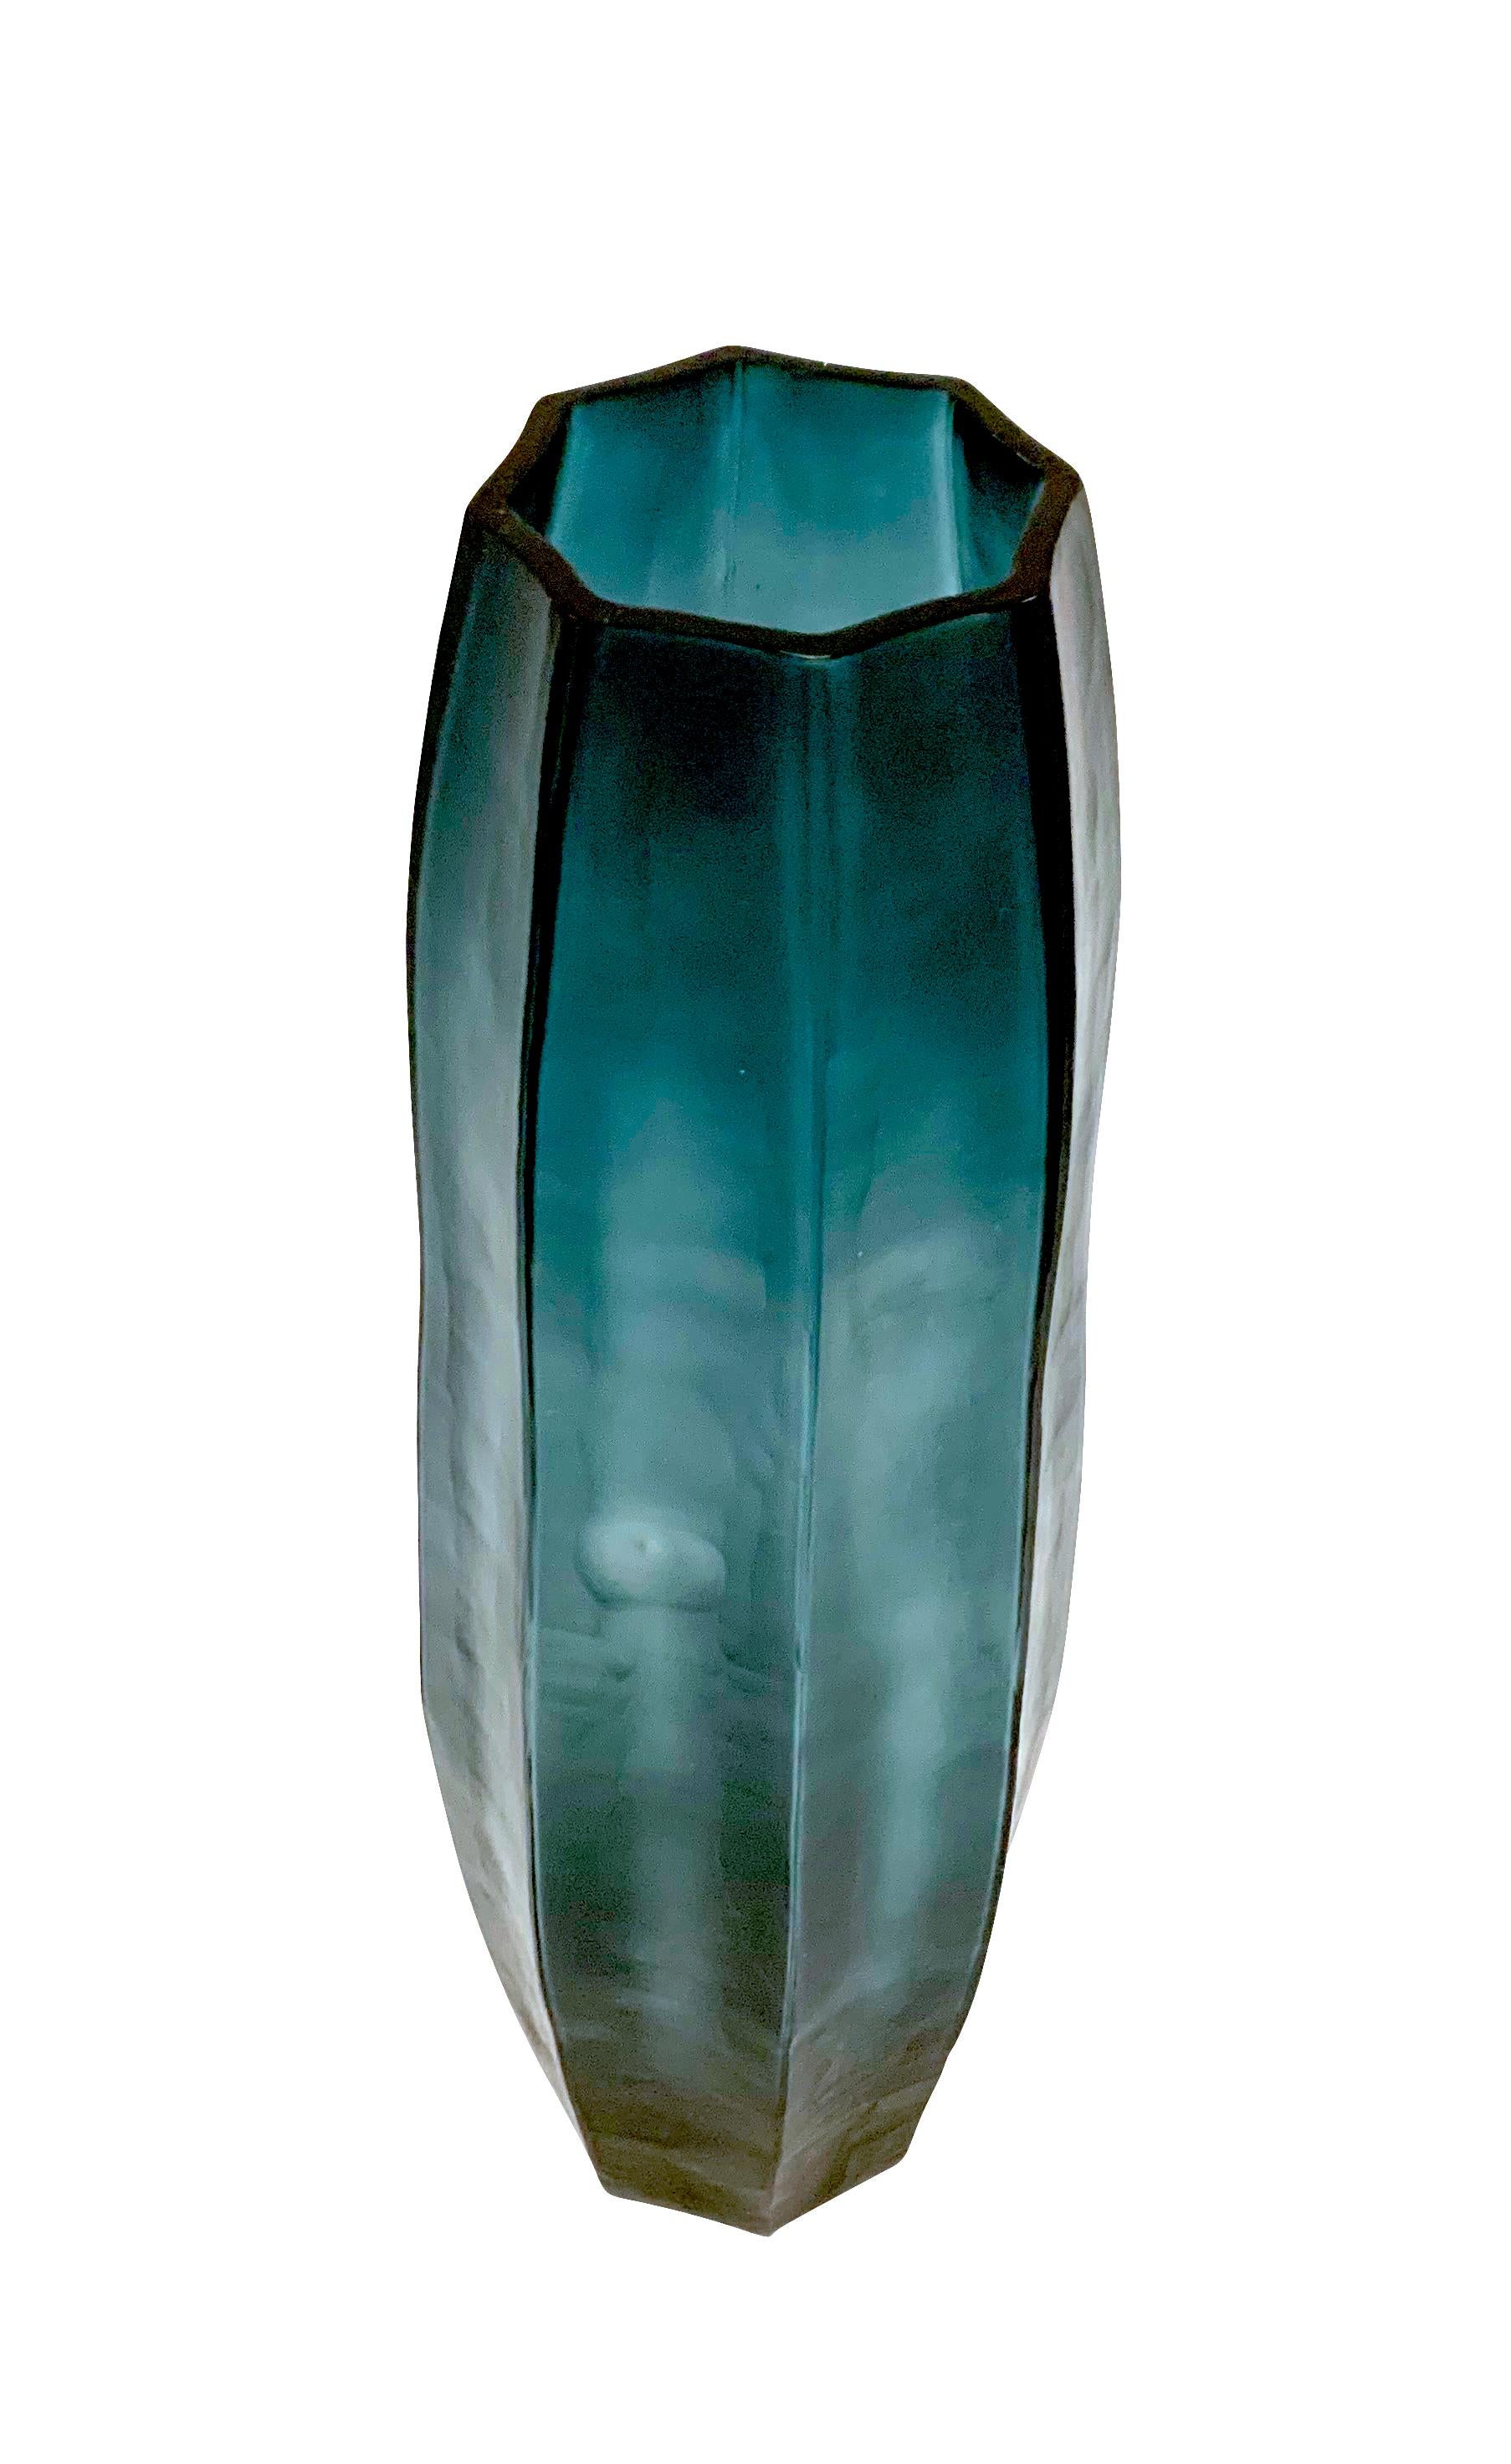 Contemporary Romanian tall deep blue glass vase.
Vertical cubist design.
Shorter version available S6372.